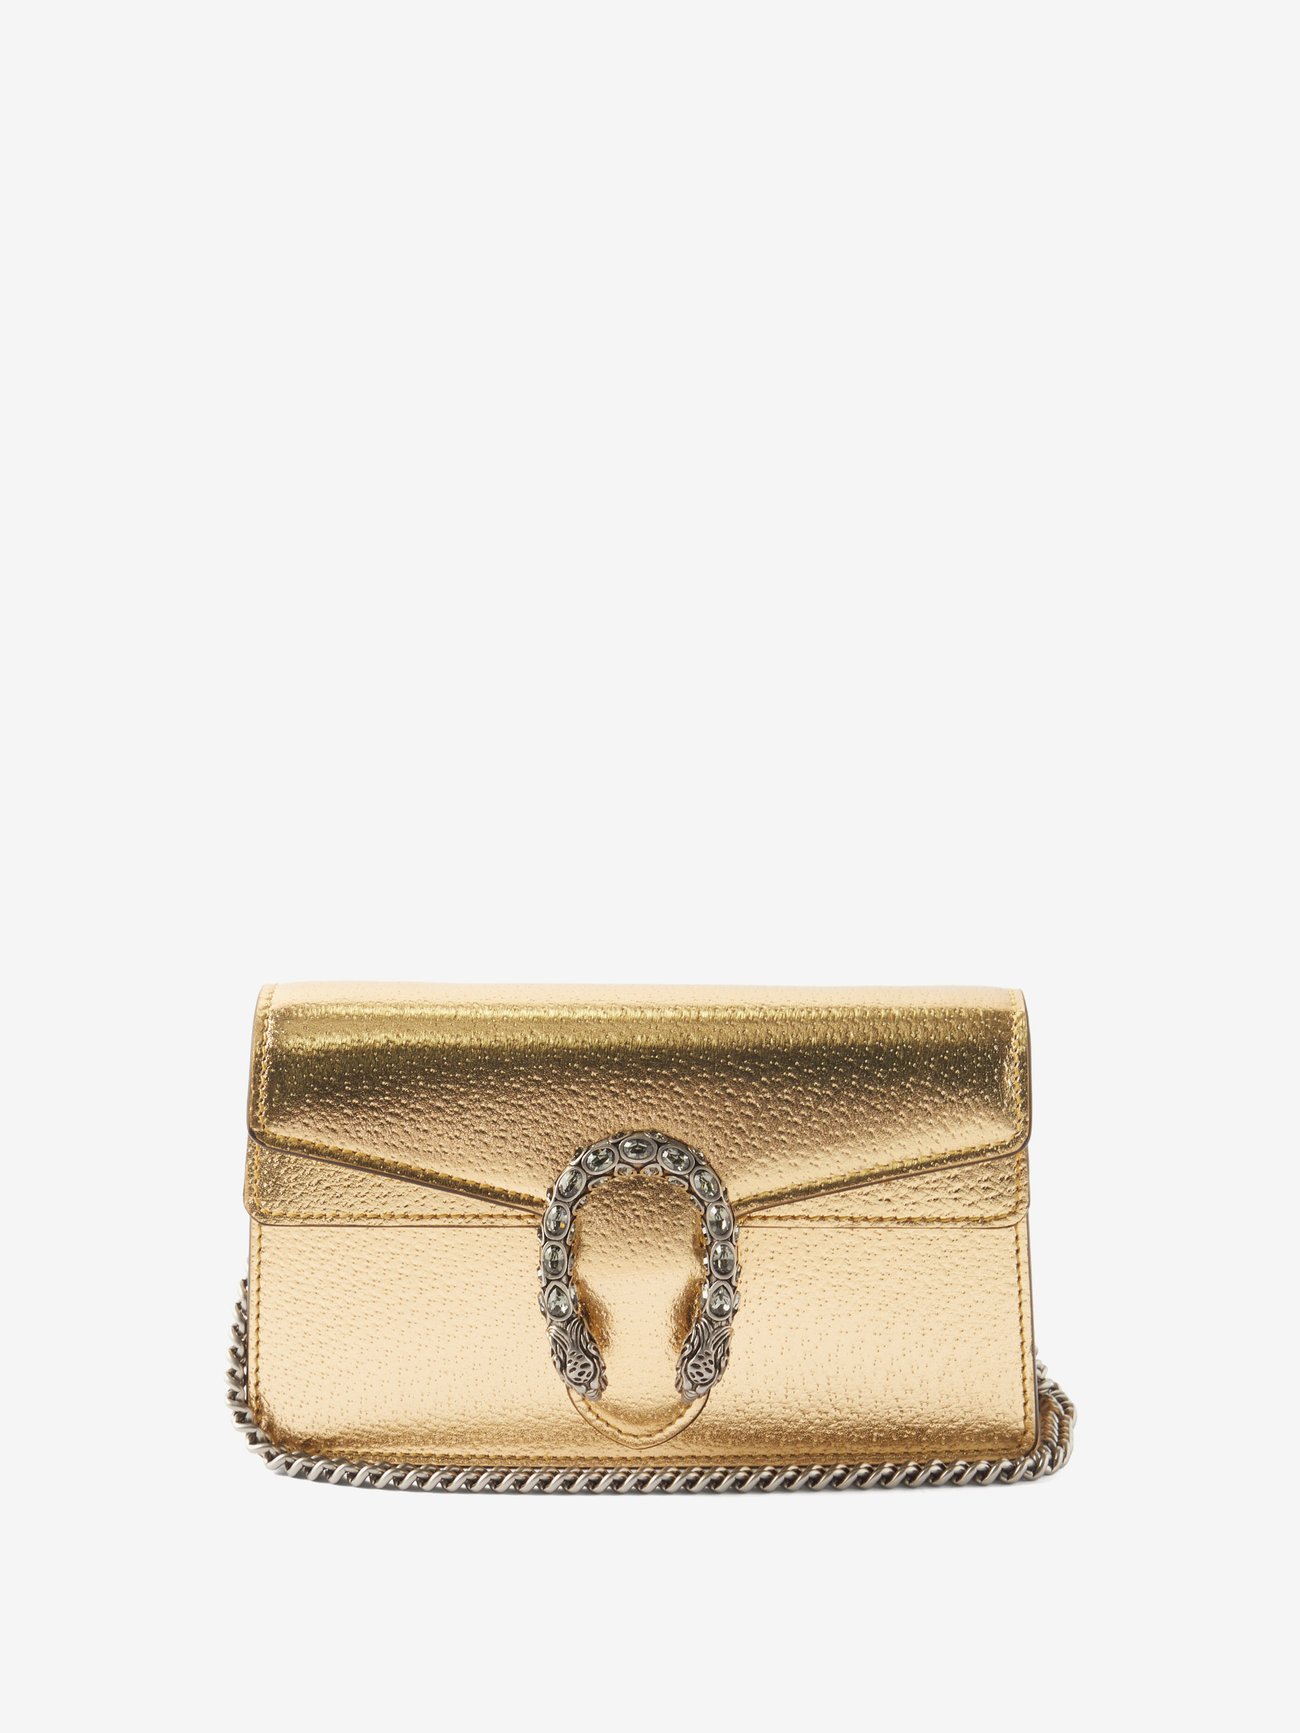 Dionysus super mini bag in gold lamé leather